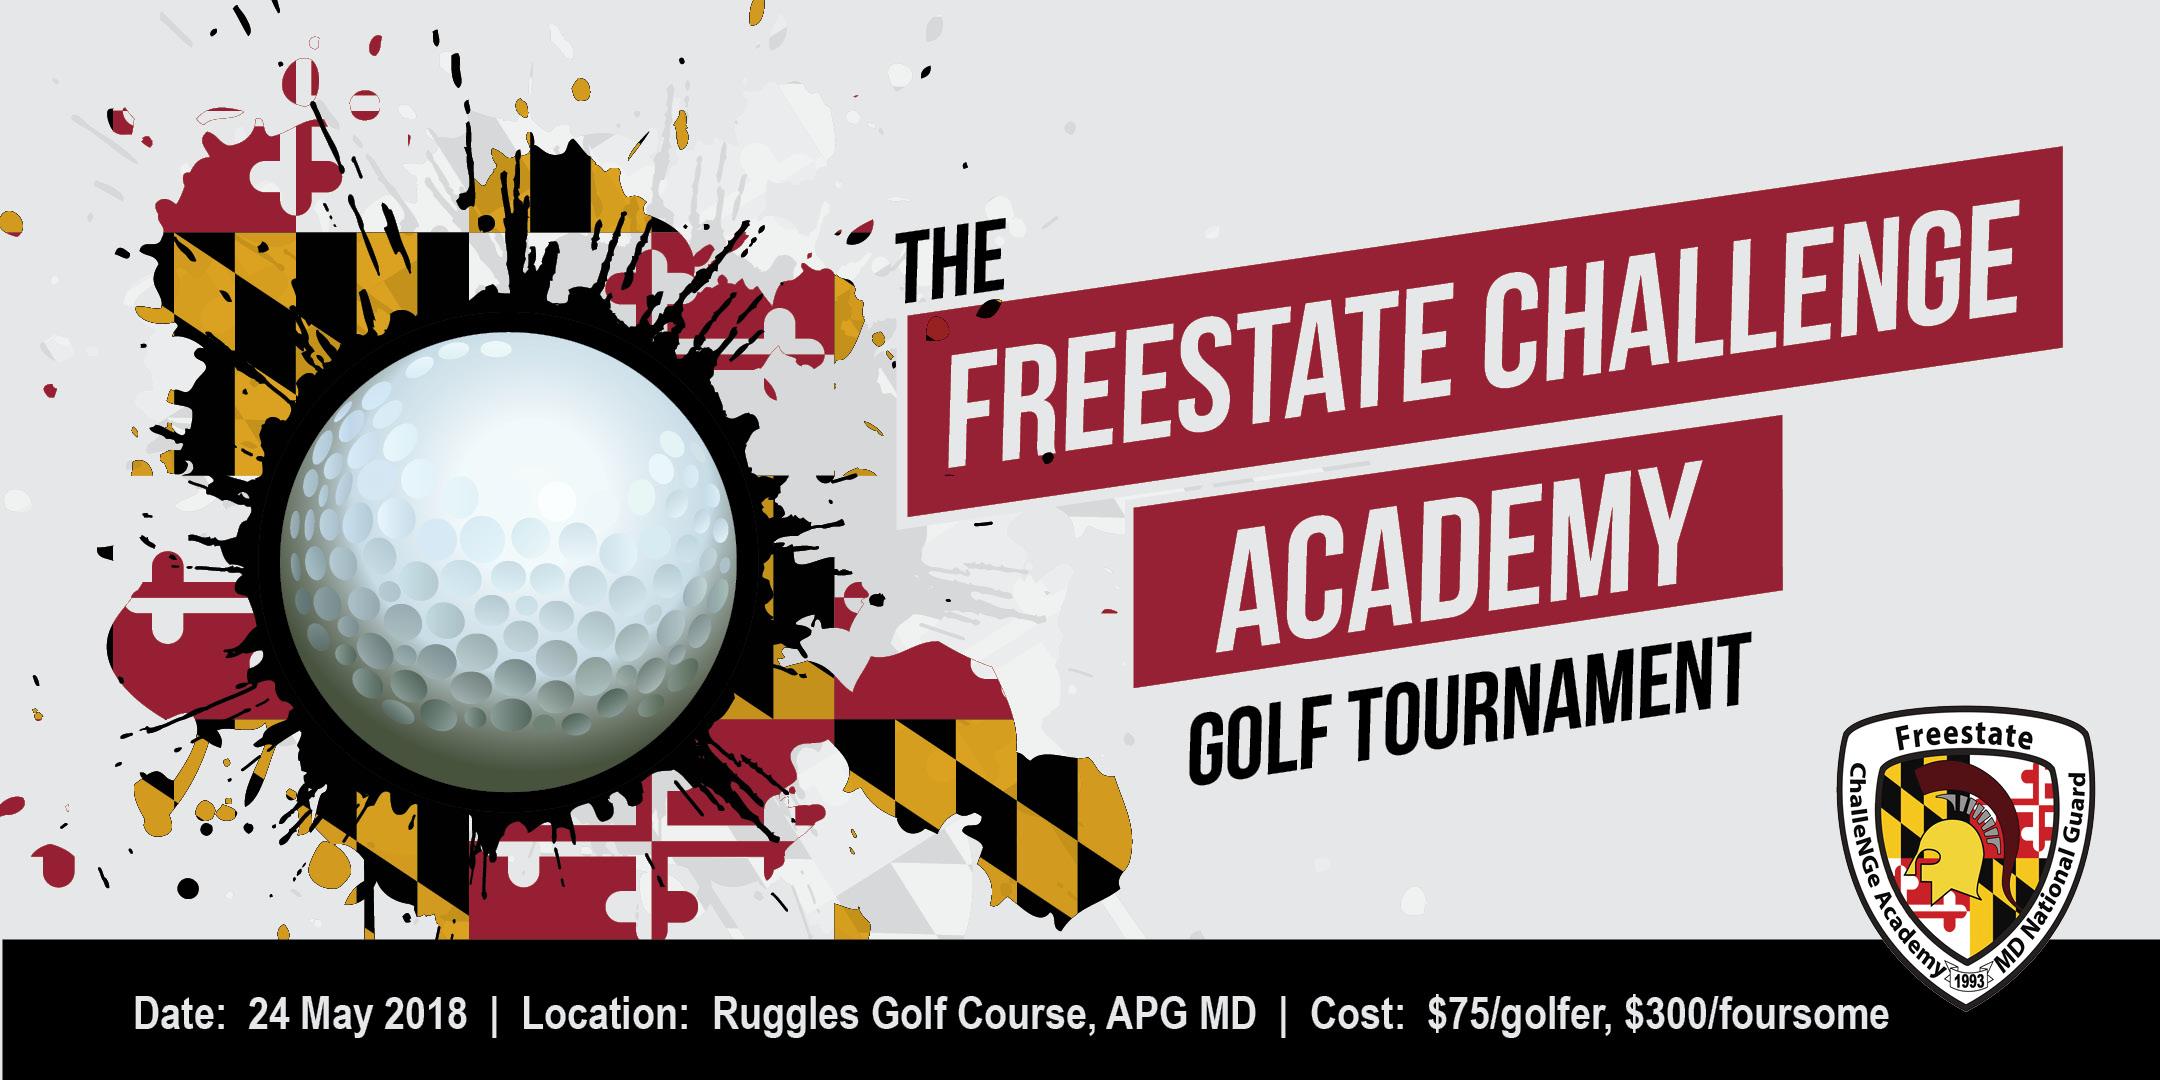 The Freestate ChalleNGe Academy Golf Tournament